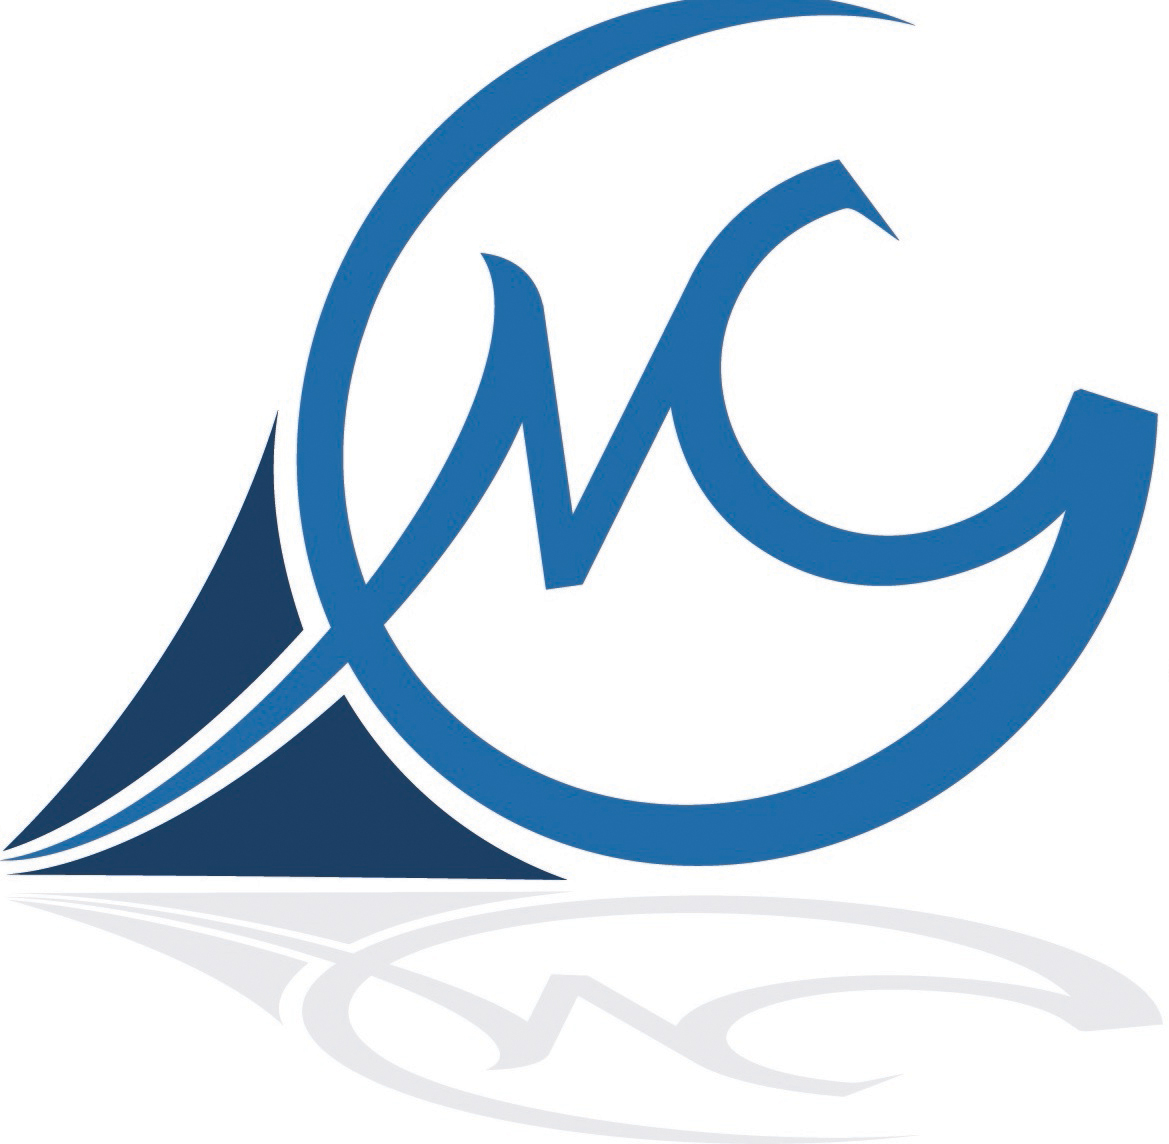 Фирма мс. Эмблема МС. Логотип МЦ. Компания МС логотипы. Картинки для логотипа.